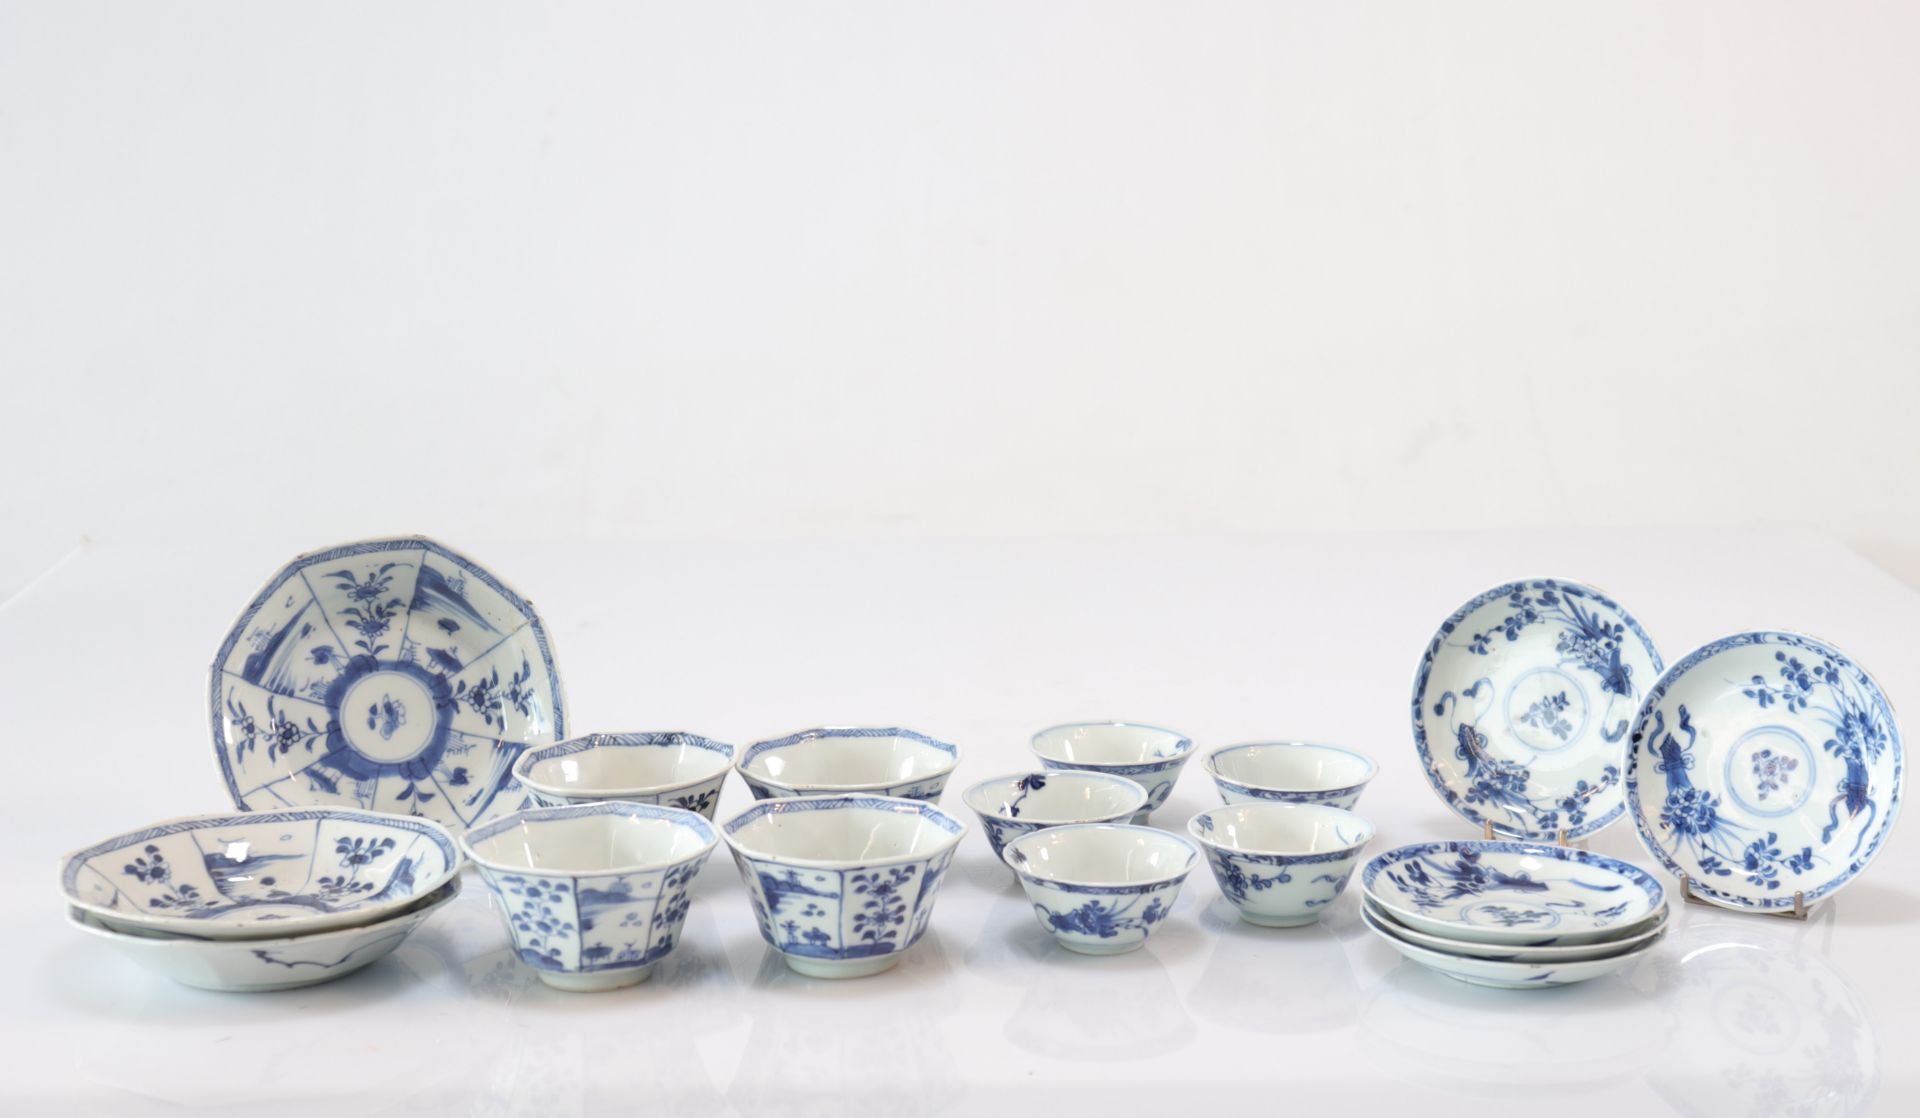 Lot of 18th century blue white porcelain